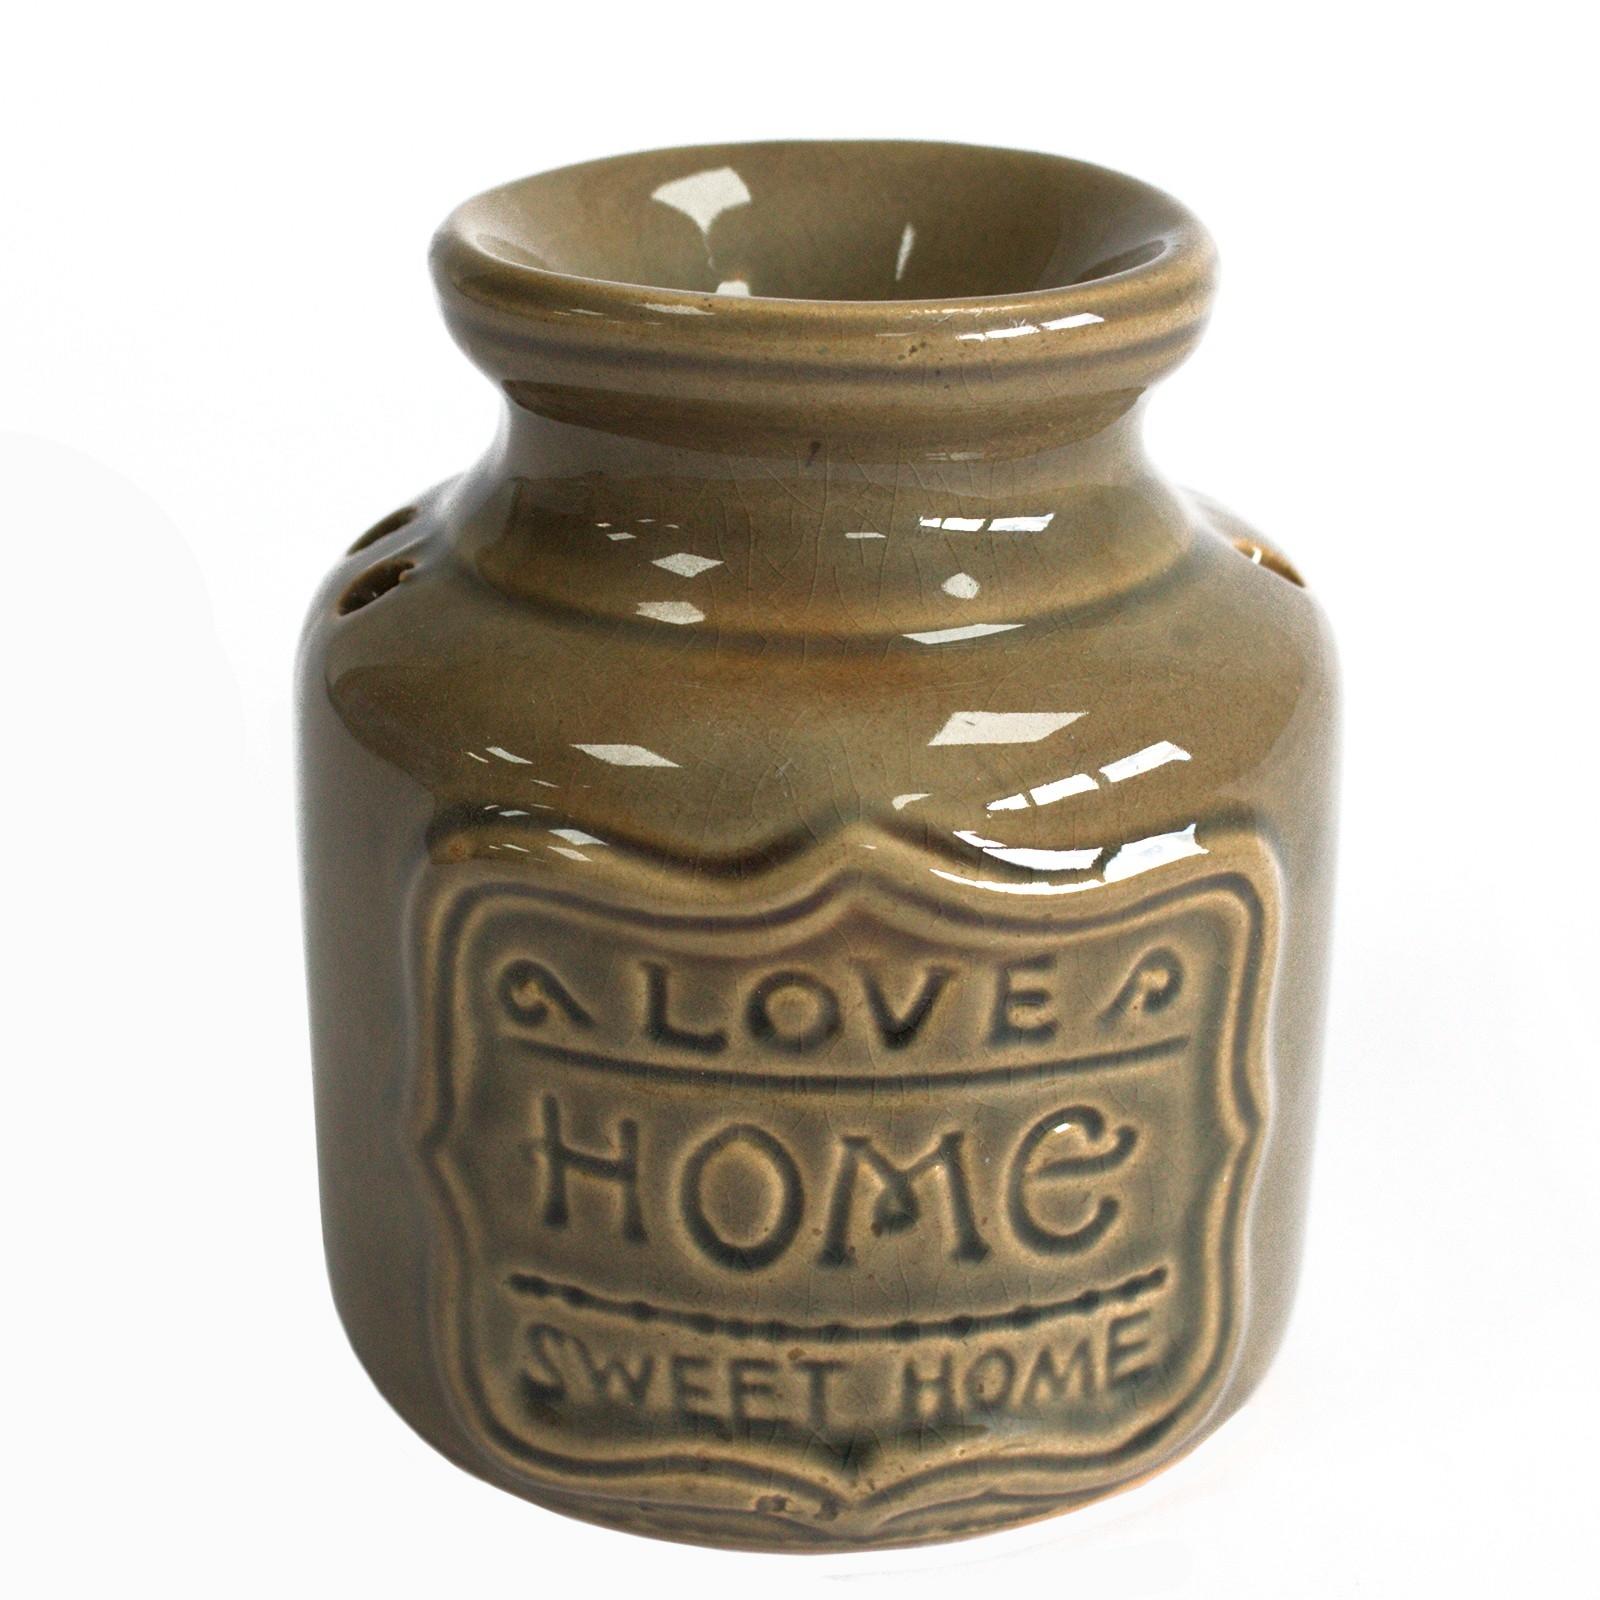 Home Oil Burner - Blue Stone - Love Home Sweet Home